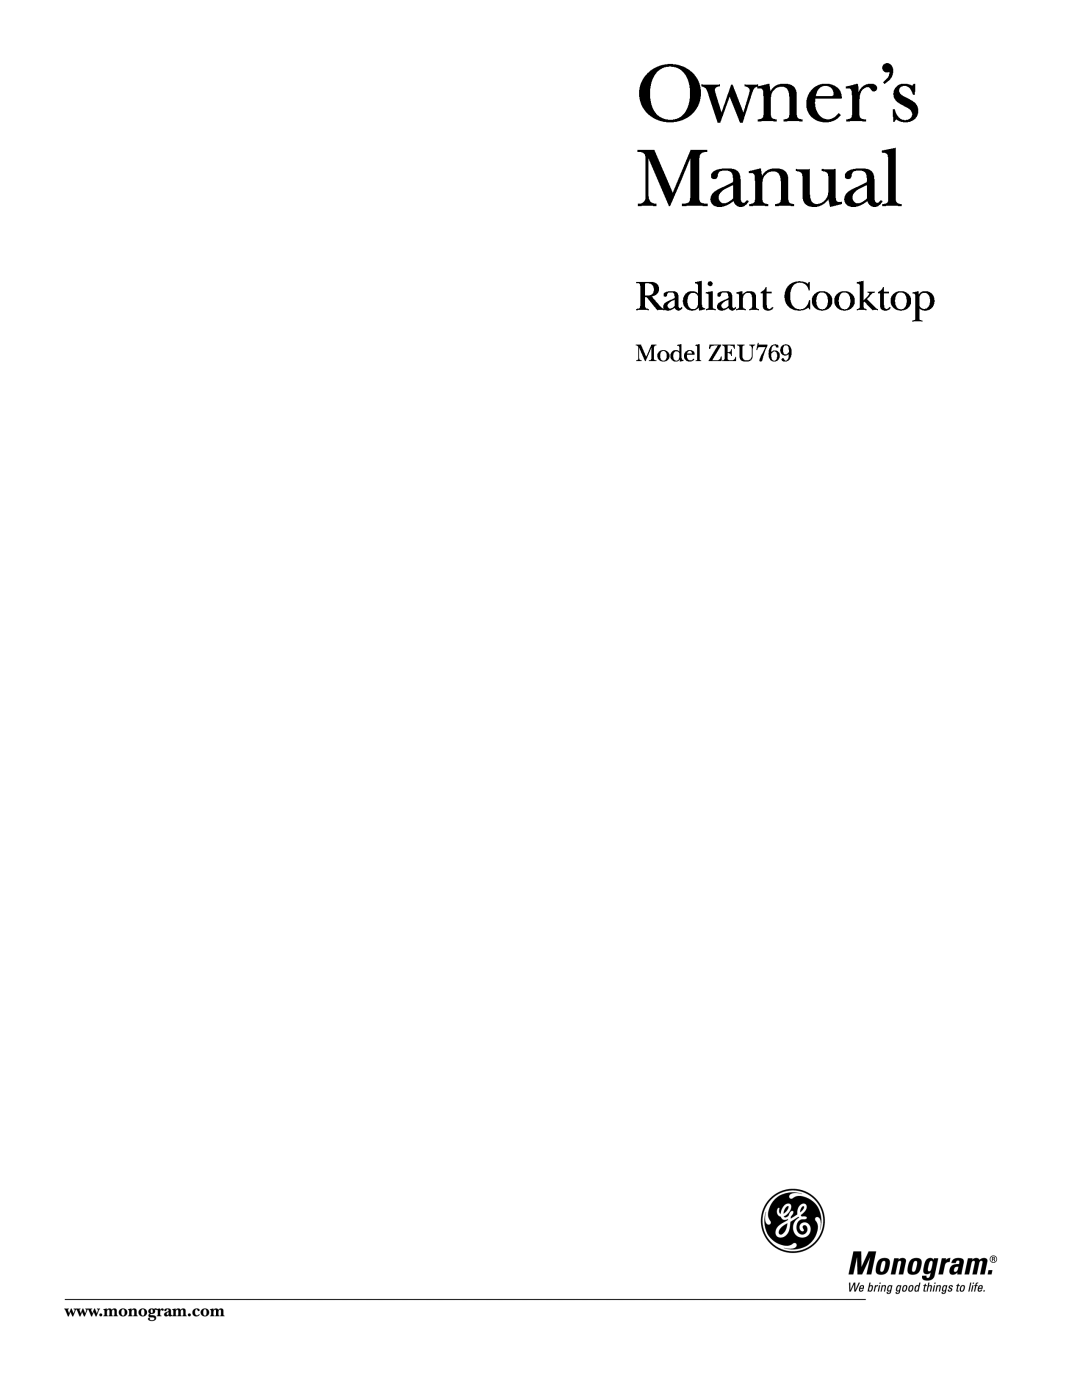 GE owner manual Model ZEU769, Owner’s Manual, Radiant Cooktop 